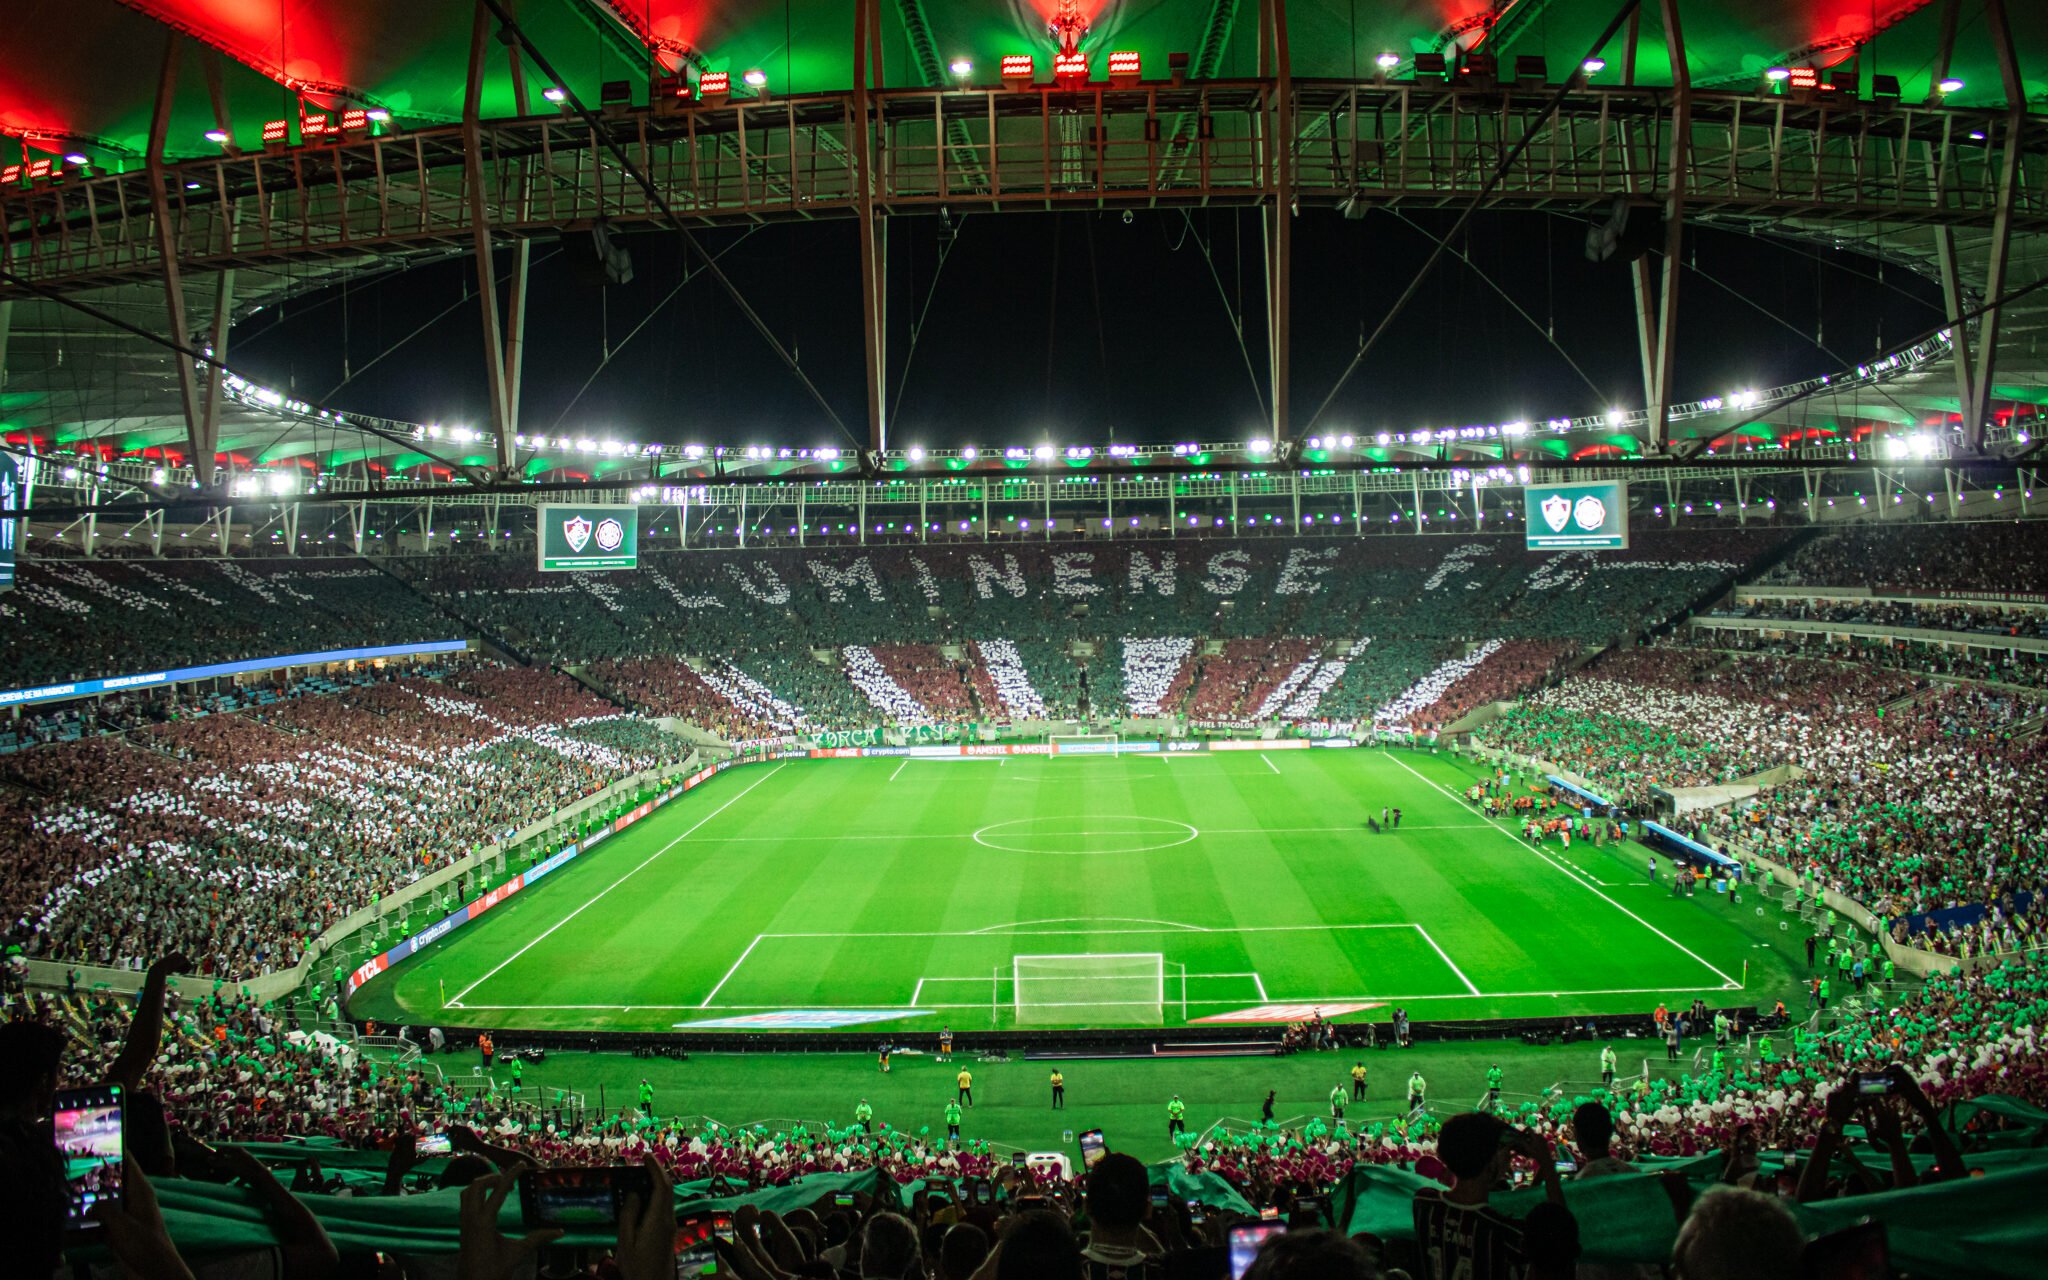 FINAL DE JOGO! EMPATE! O Fluminense - TNT Sports Brasil